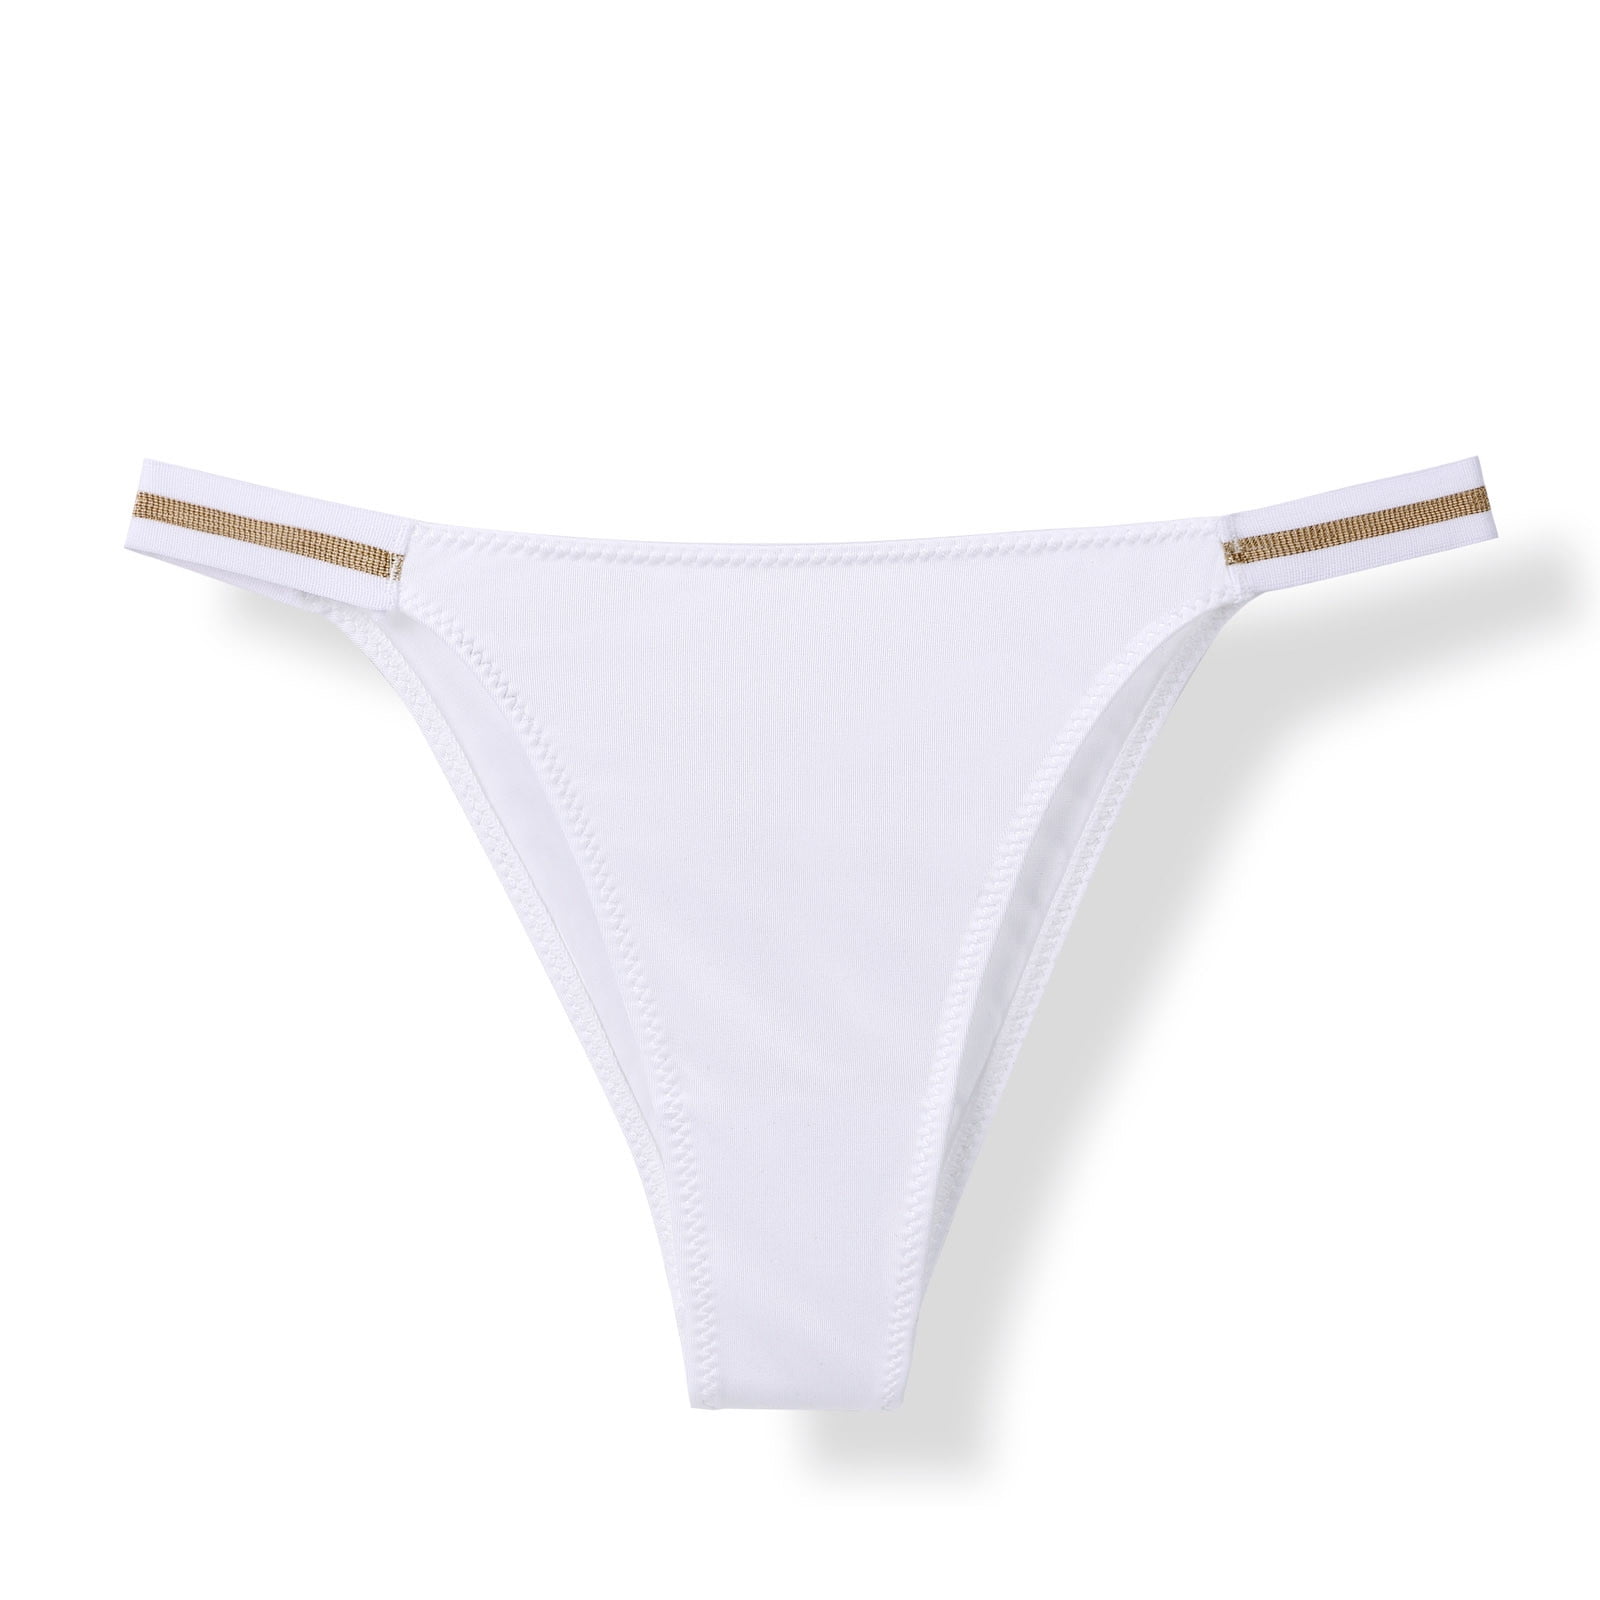 Shpwfbe Lingerie For Women Low Waist Thong Transparent Underwear Panties 